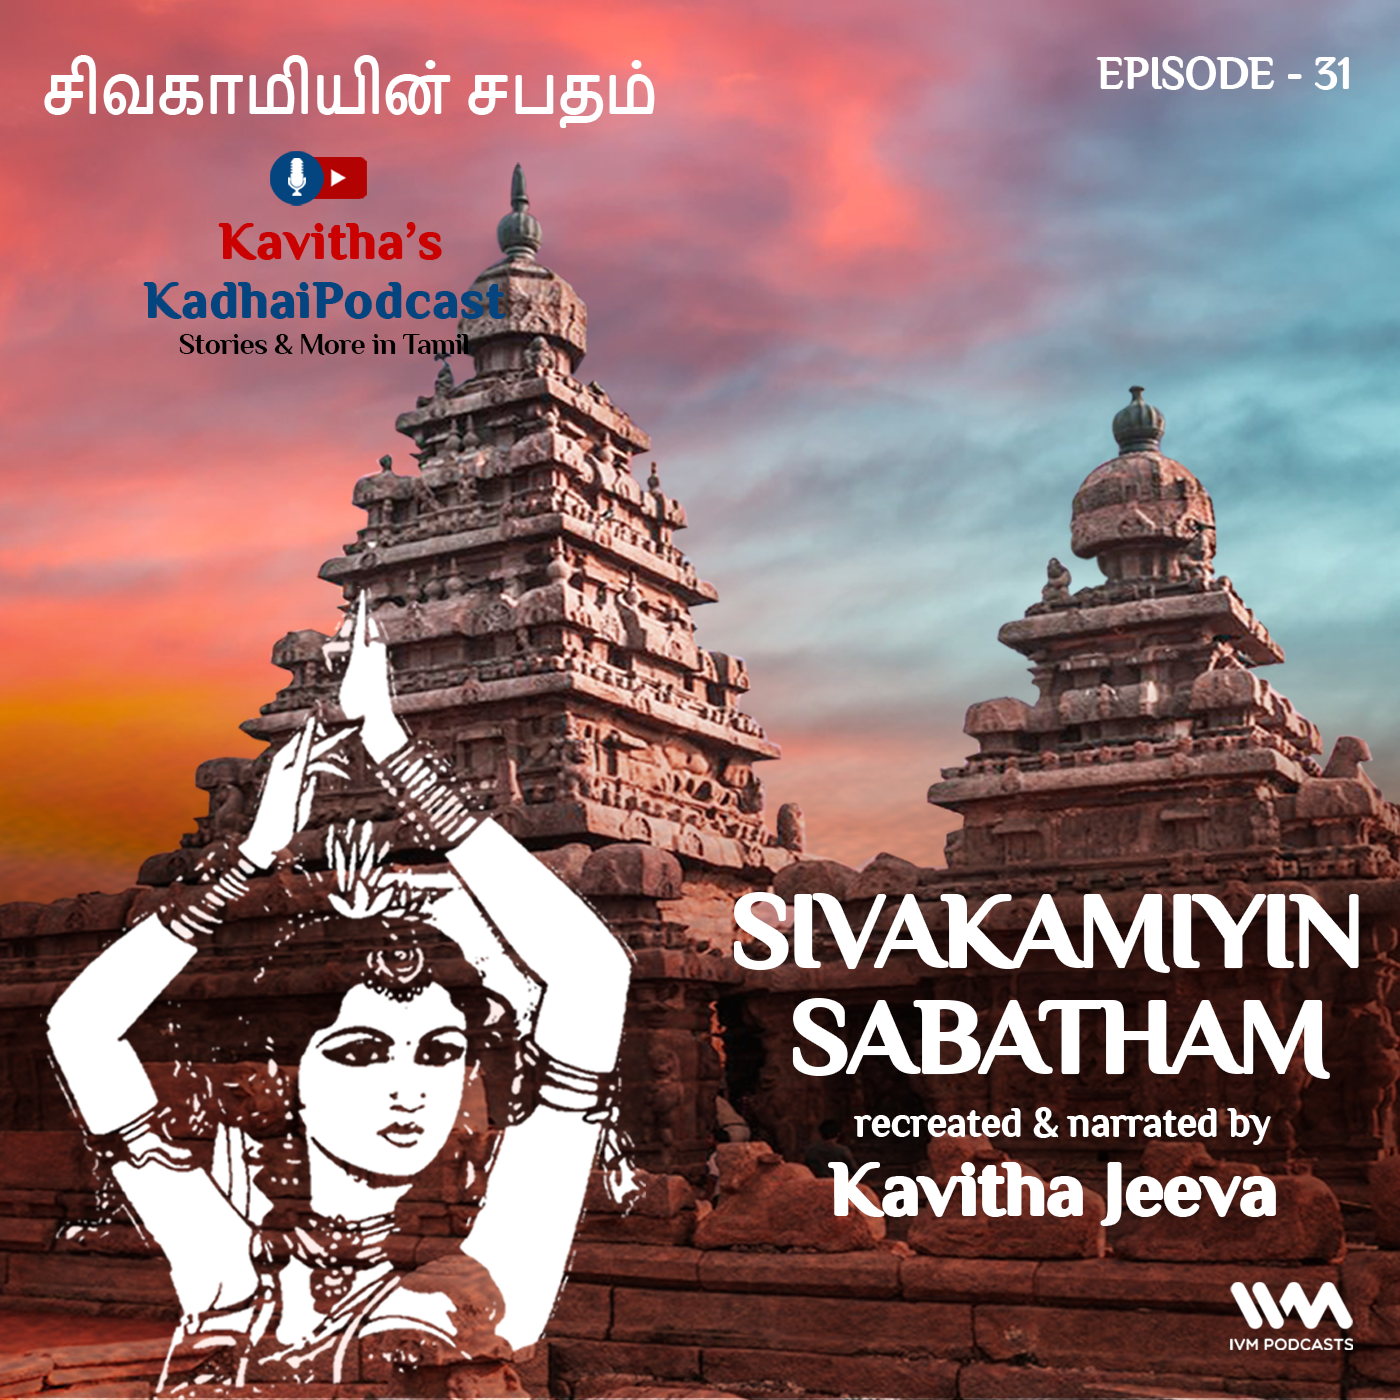 KadhaiPodcast’s Sivakamiyin Sabatham - Episode # 31